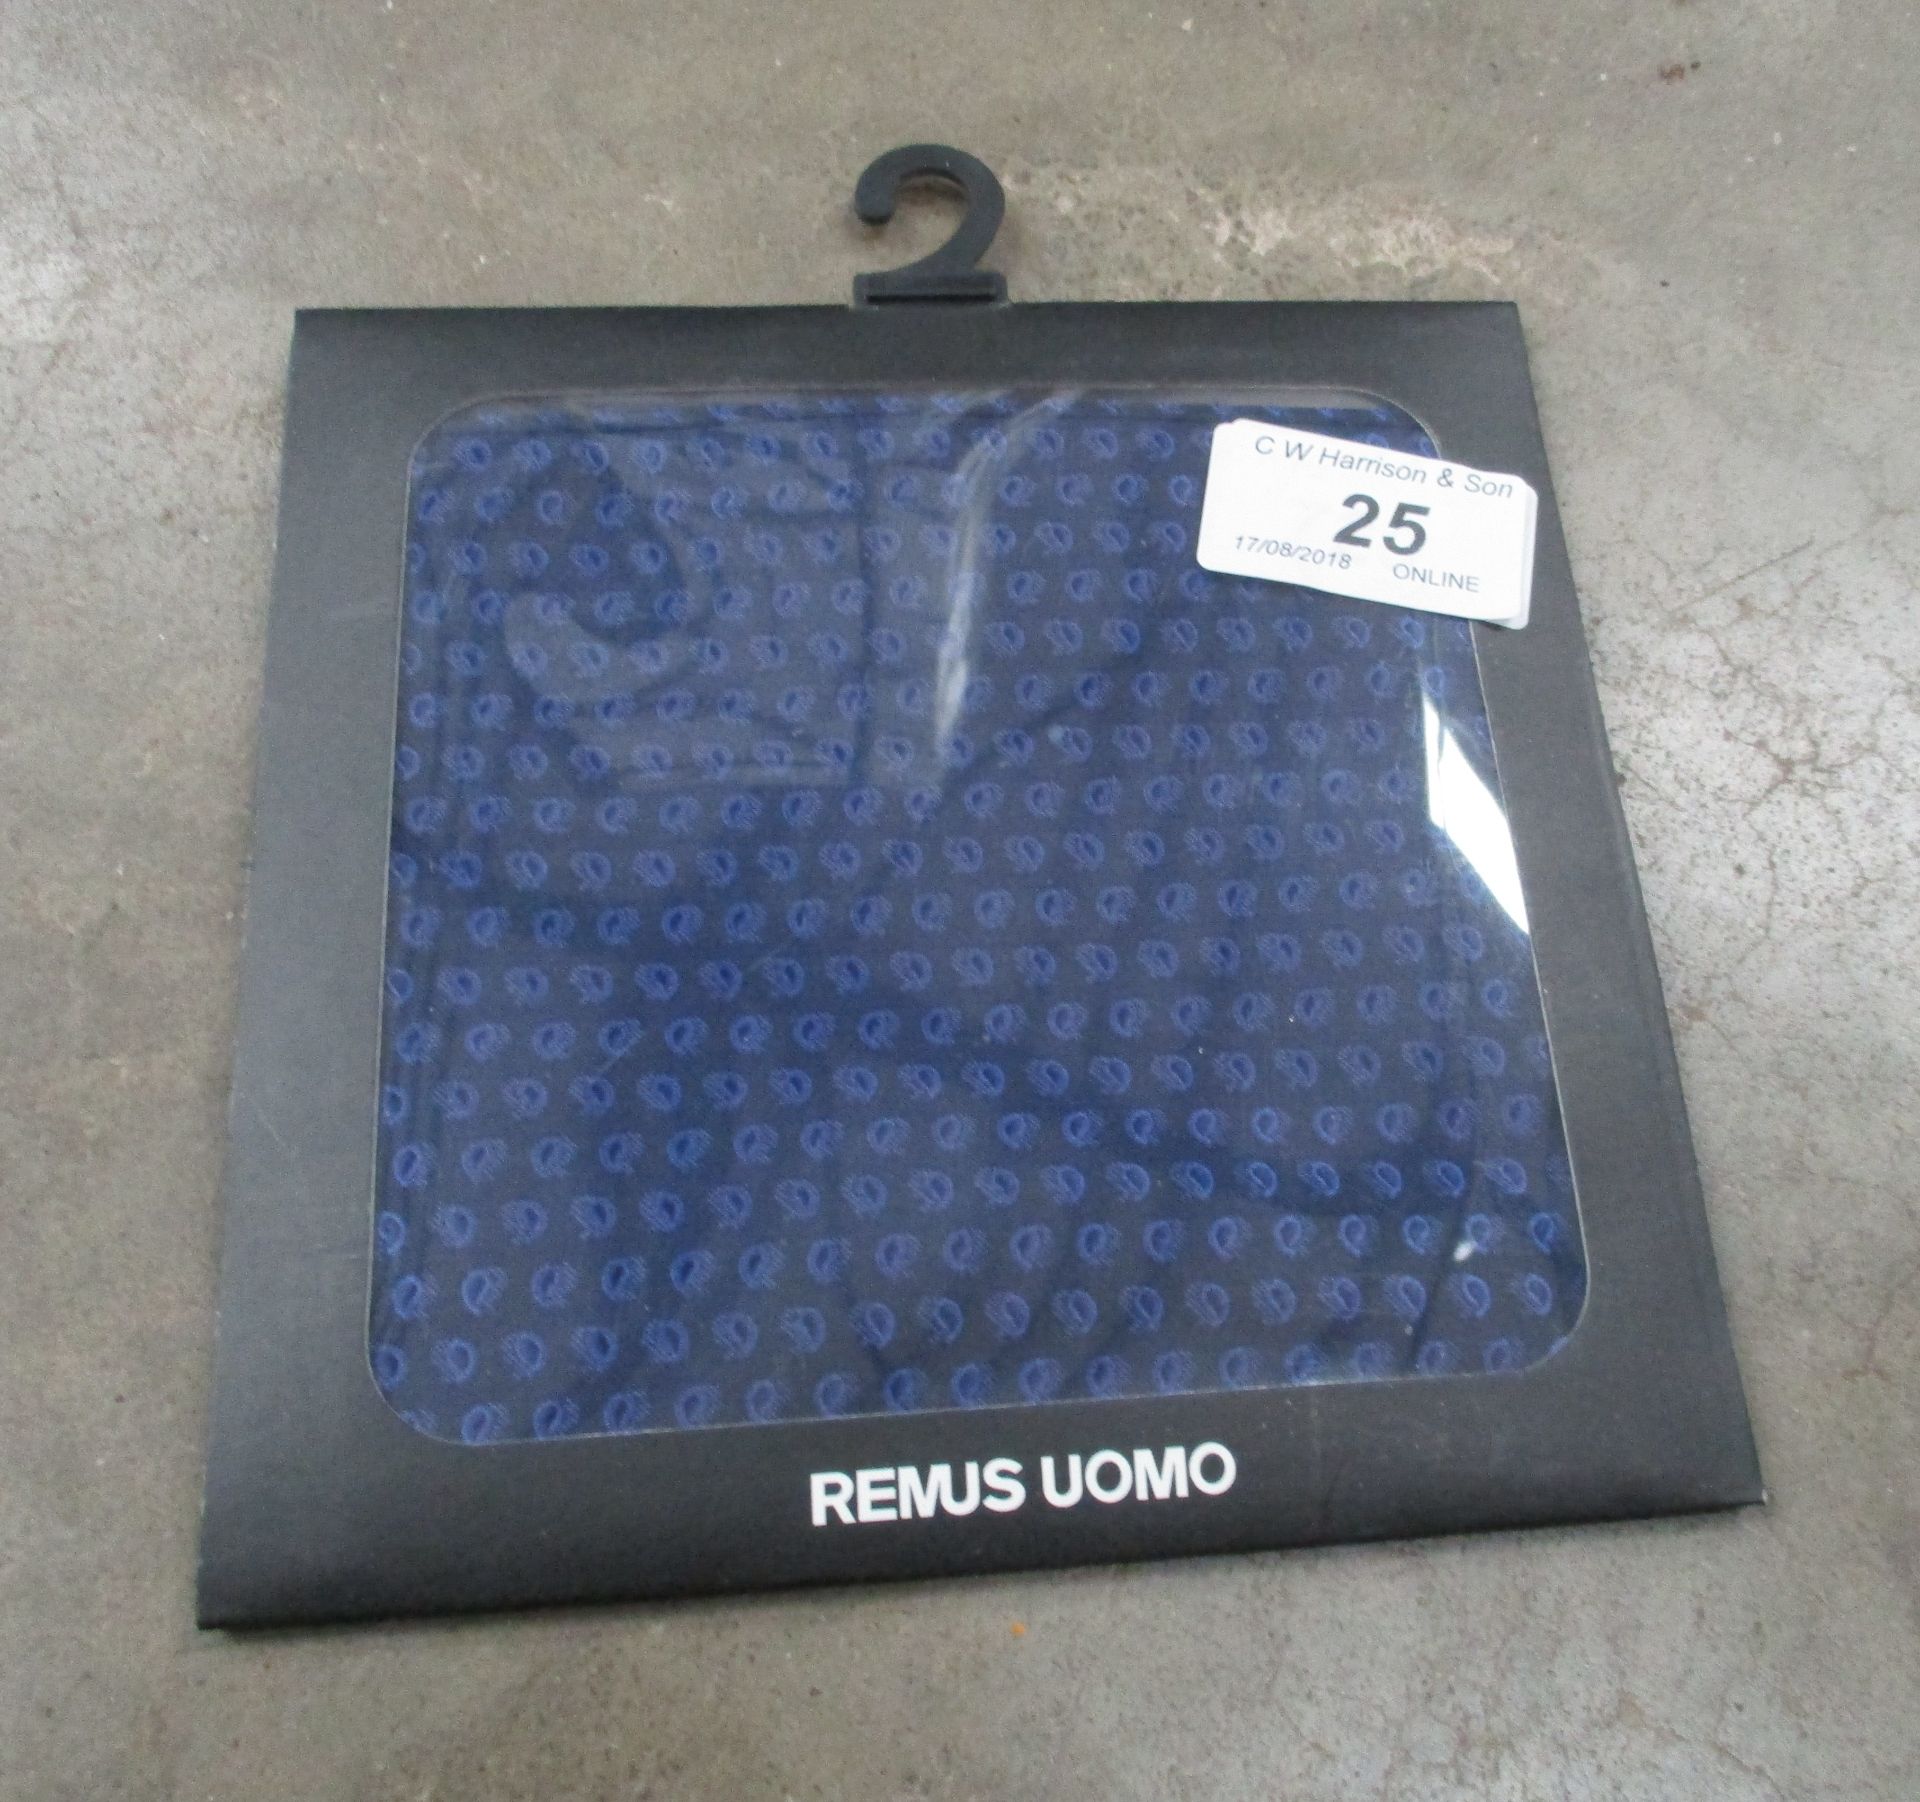 3 x Remus Uomo pocket squares RRP £10 each